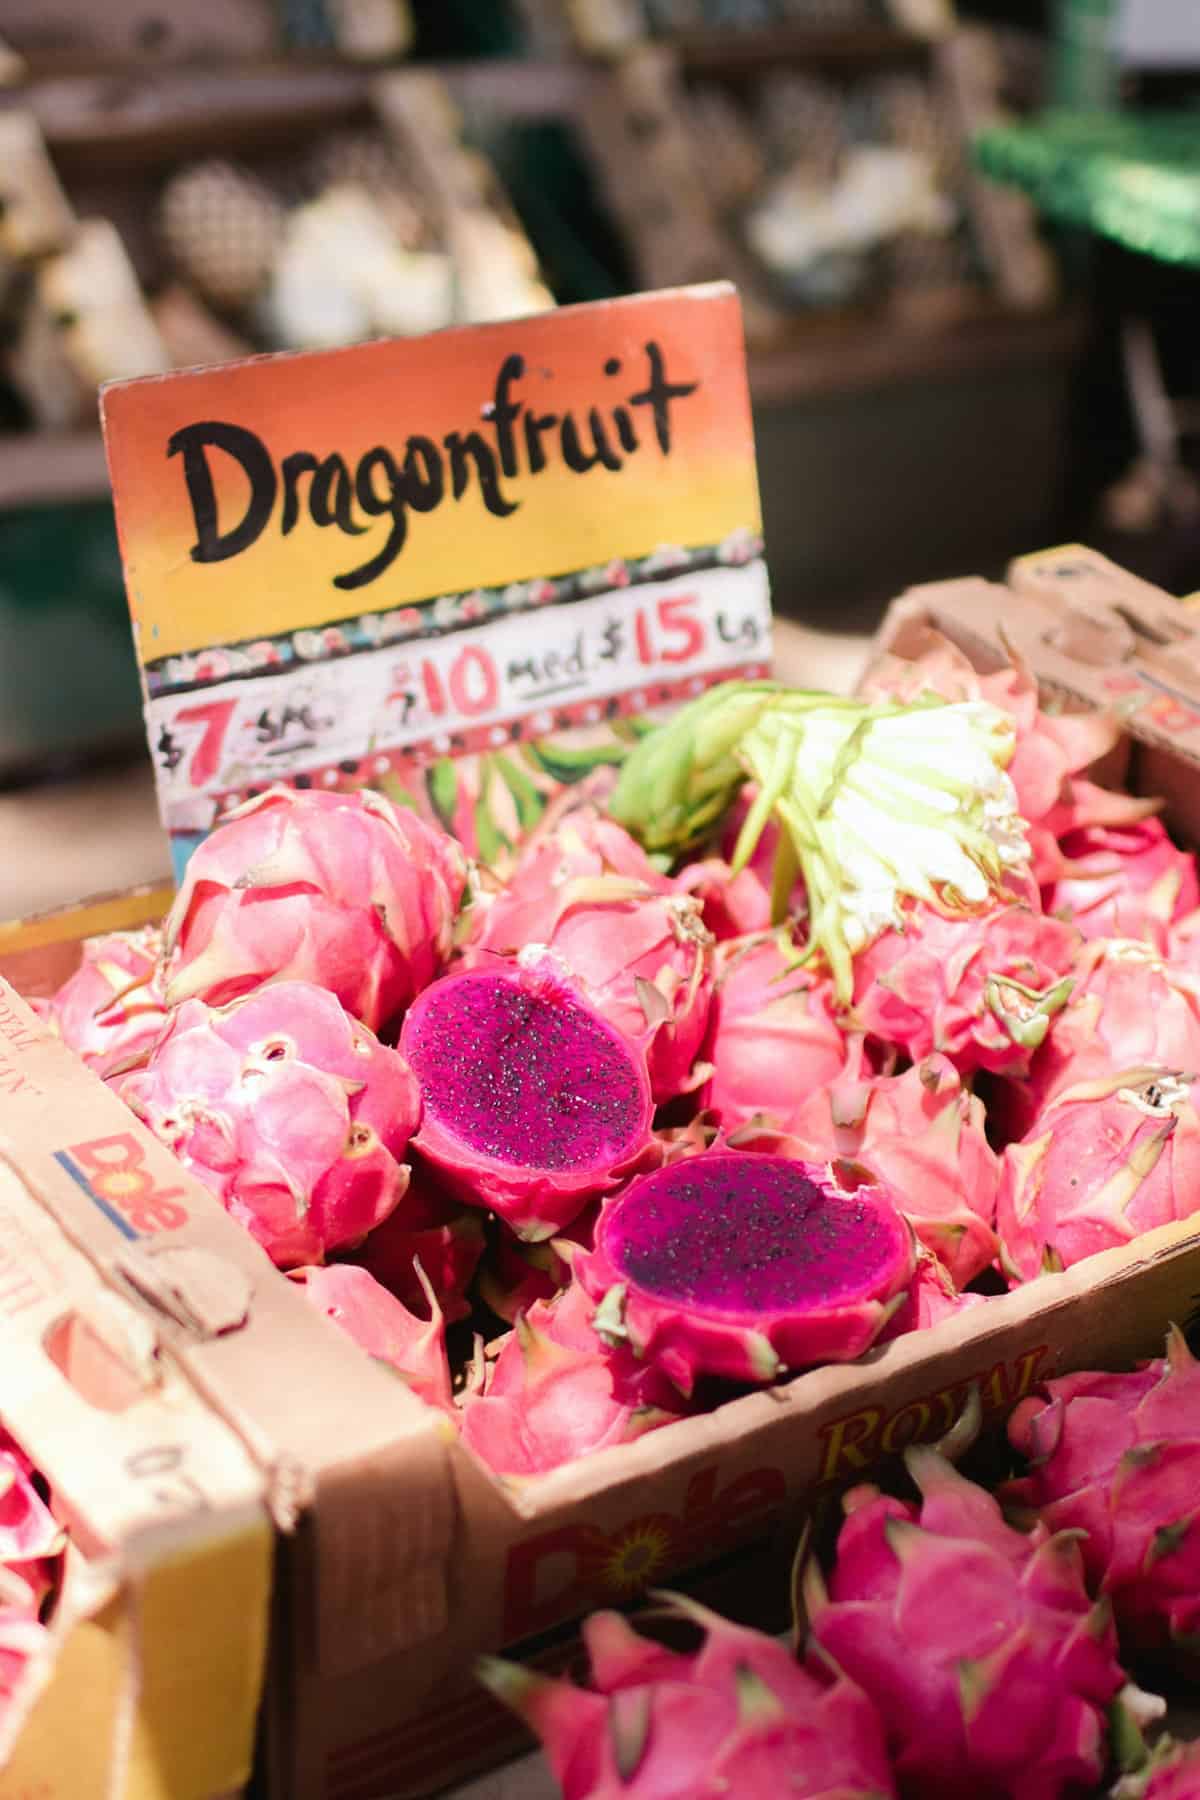 bright pink dragon fruit on inside sliced for sale